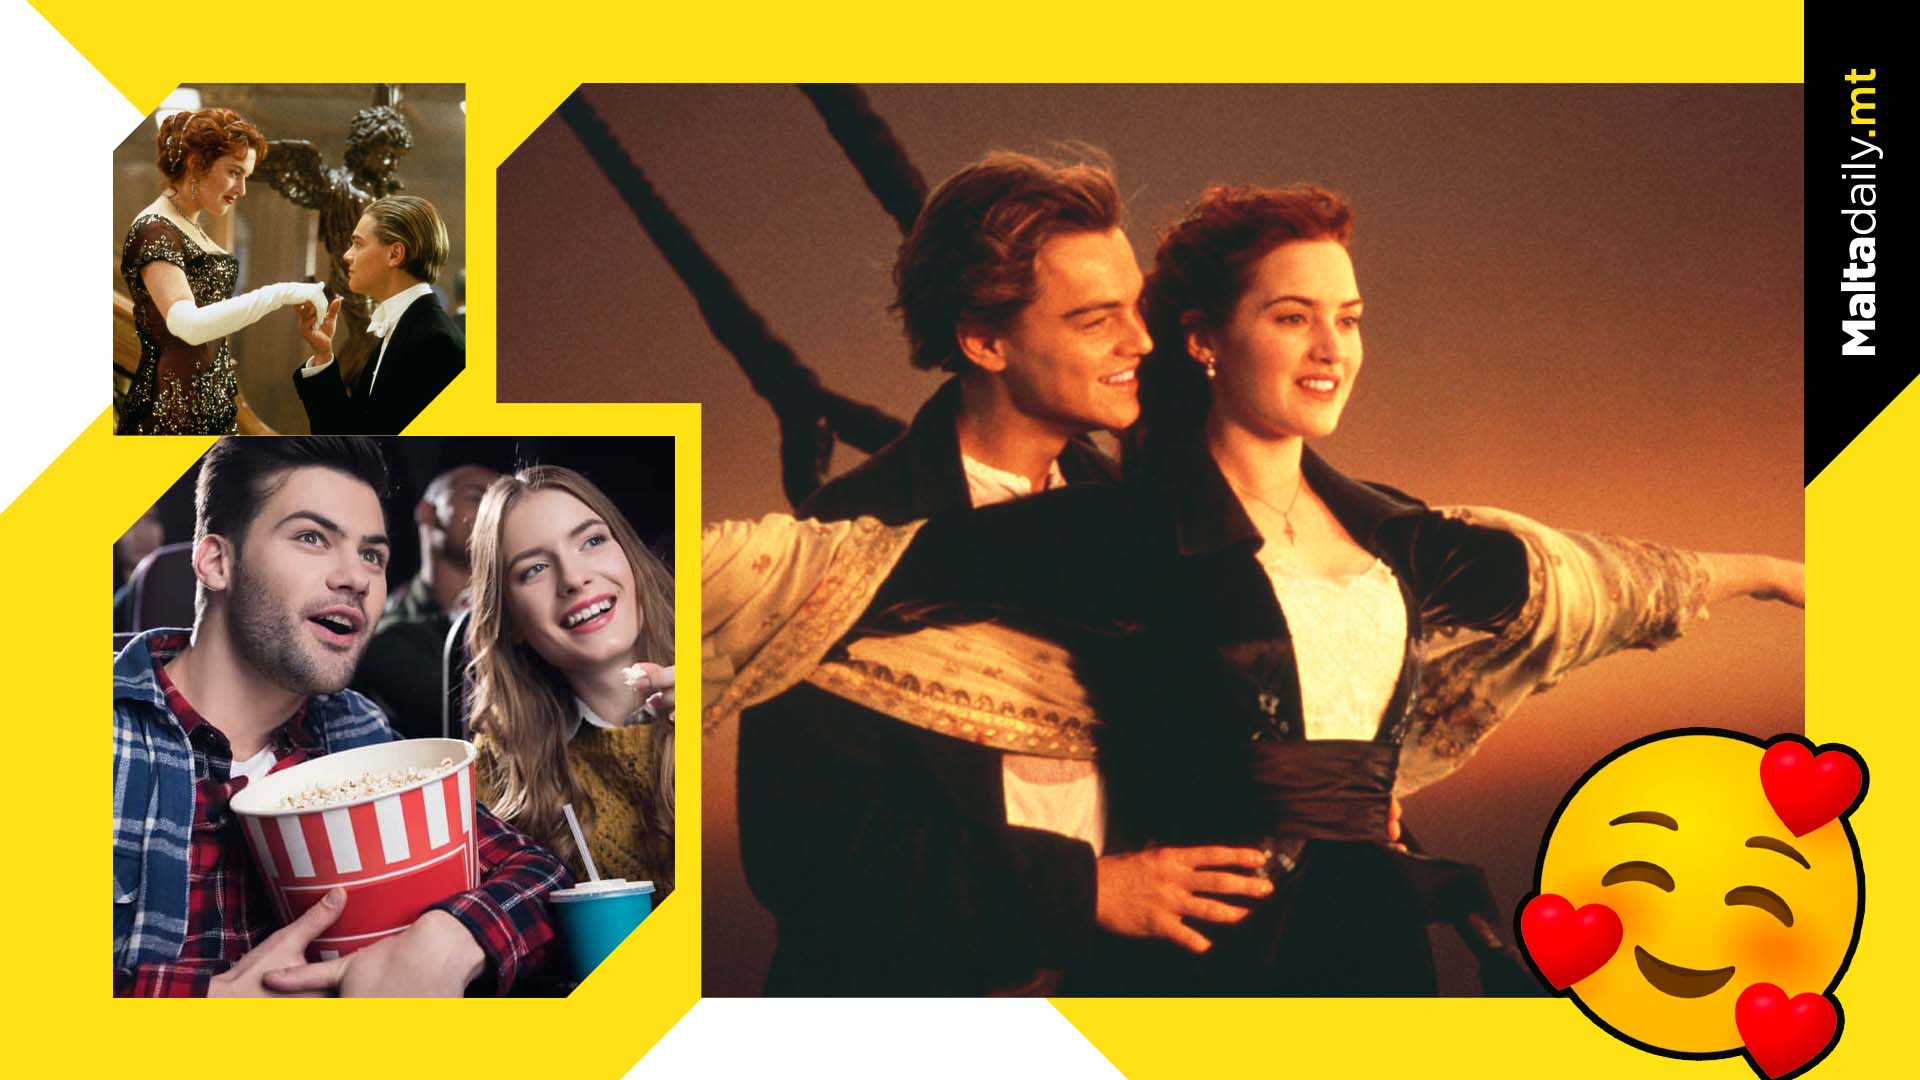 Titanic to make brief cinema comeback for Valentine’s Day